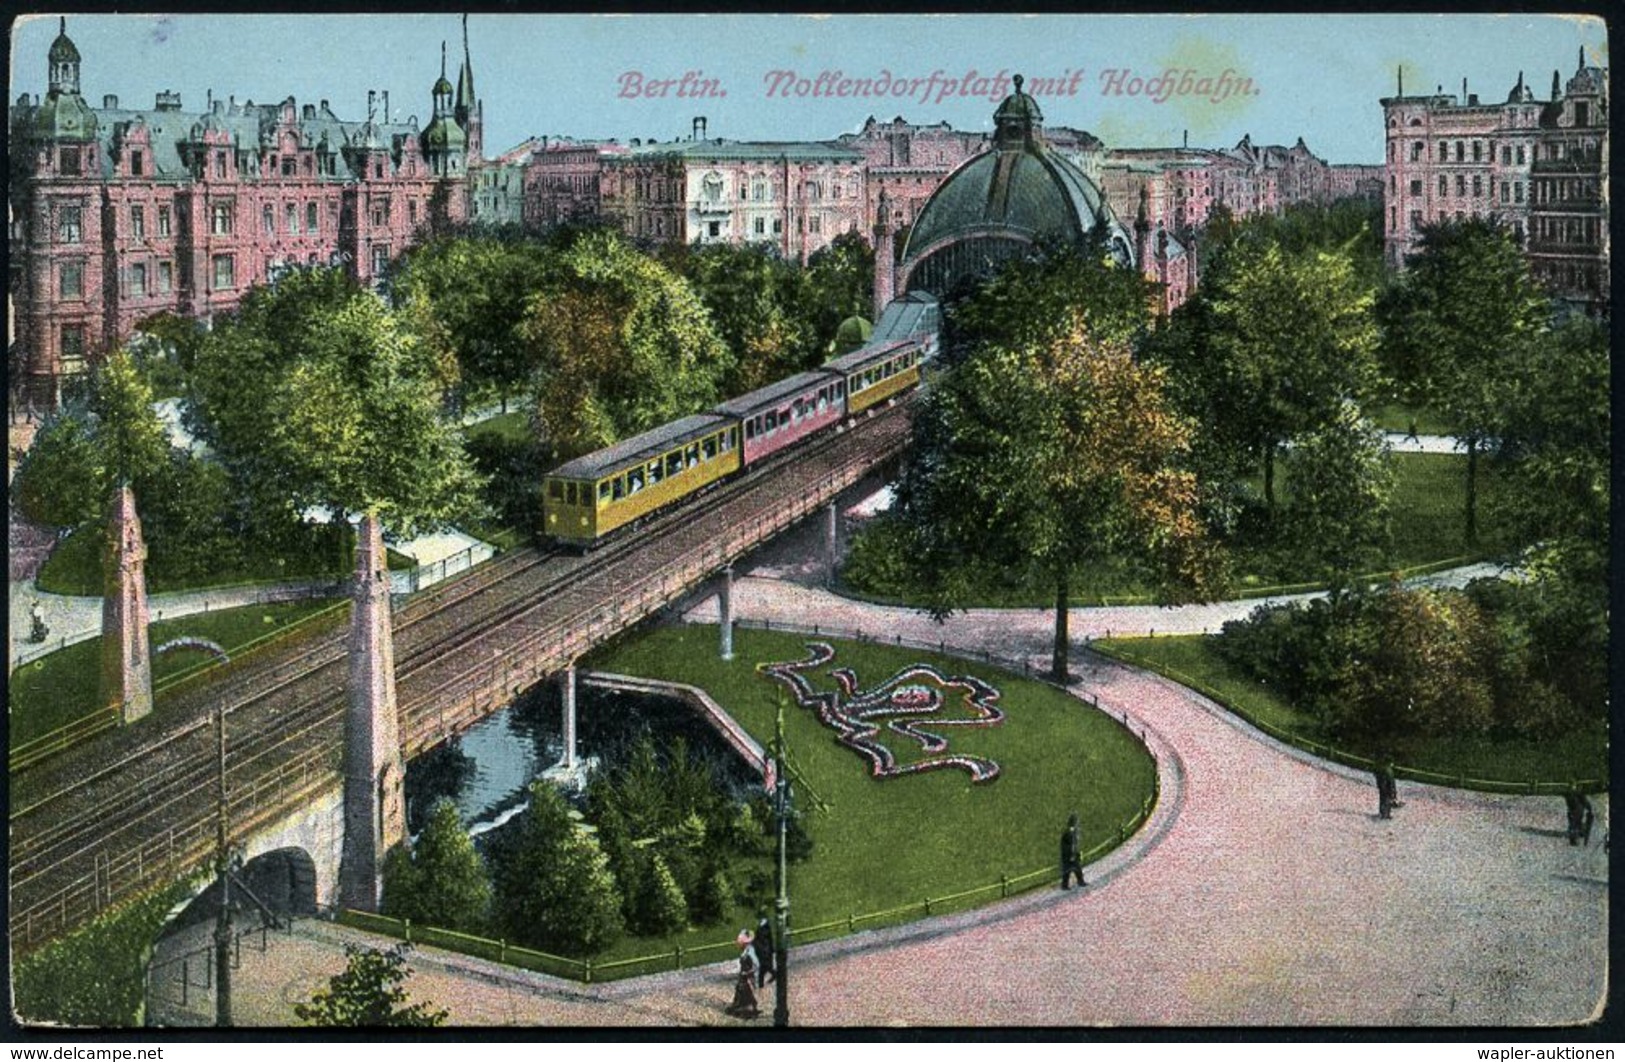 UNTERGRUNDBAHN /U-BAHN : Berlin-Schöneberg 1908/17 U-Bahnhof Nollendorfplatz, 8 verschiedene Color-Foto-Ak., teils gebr.